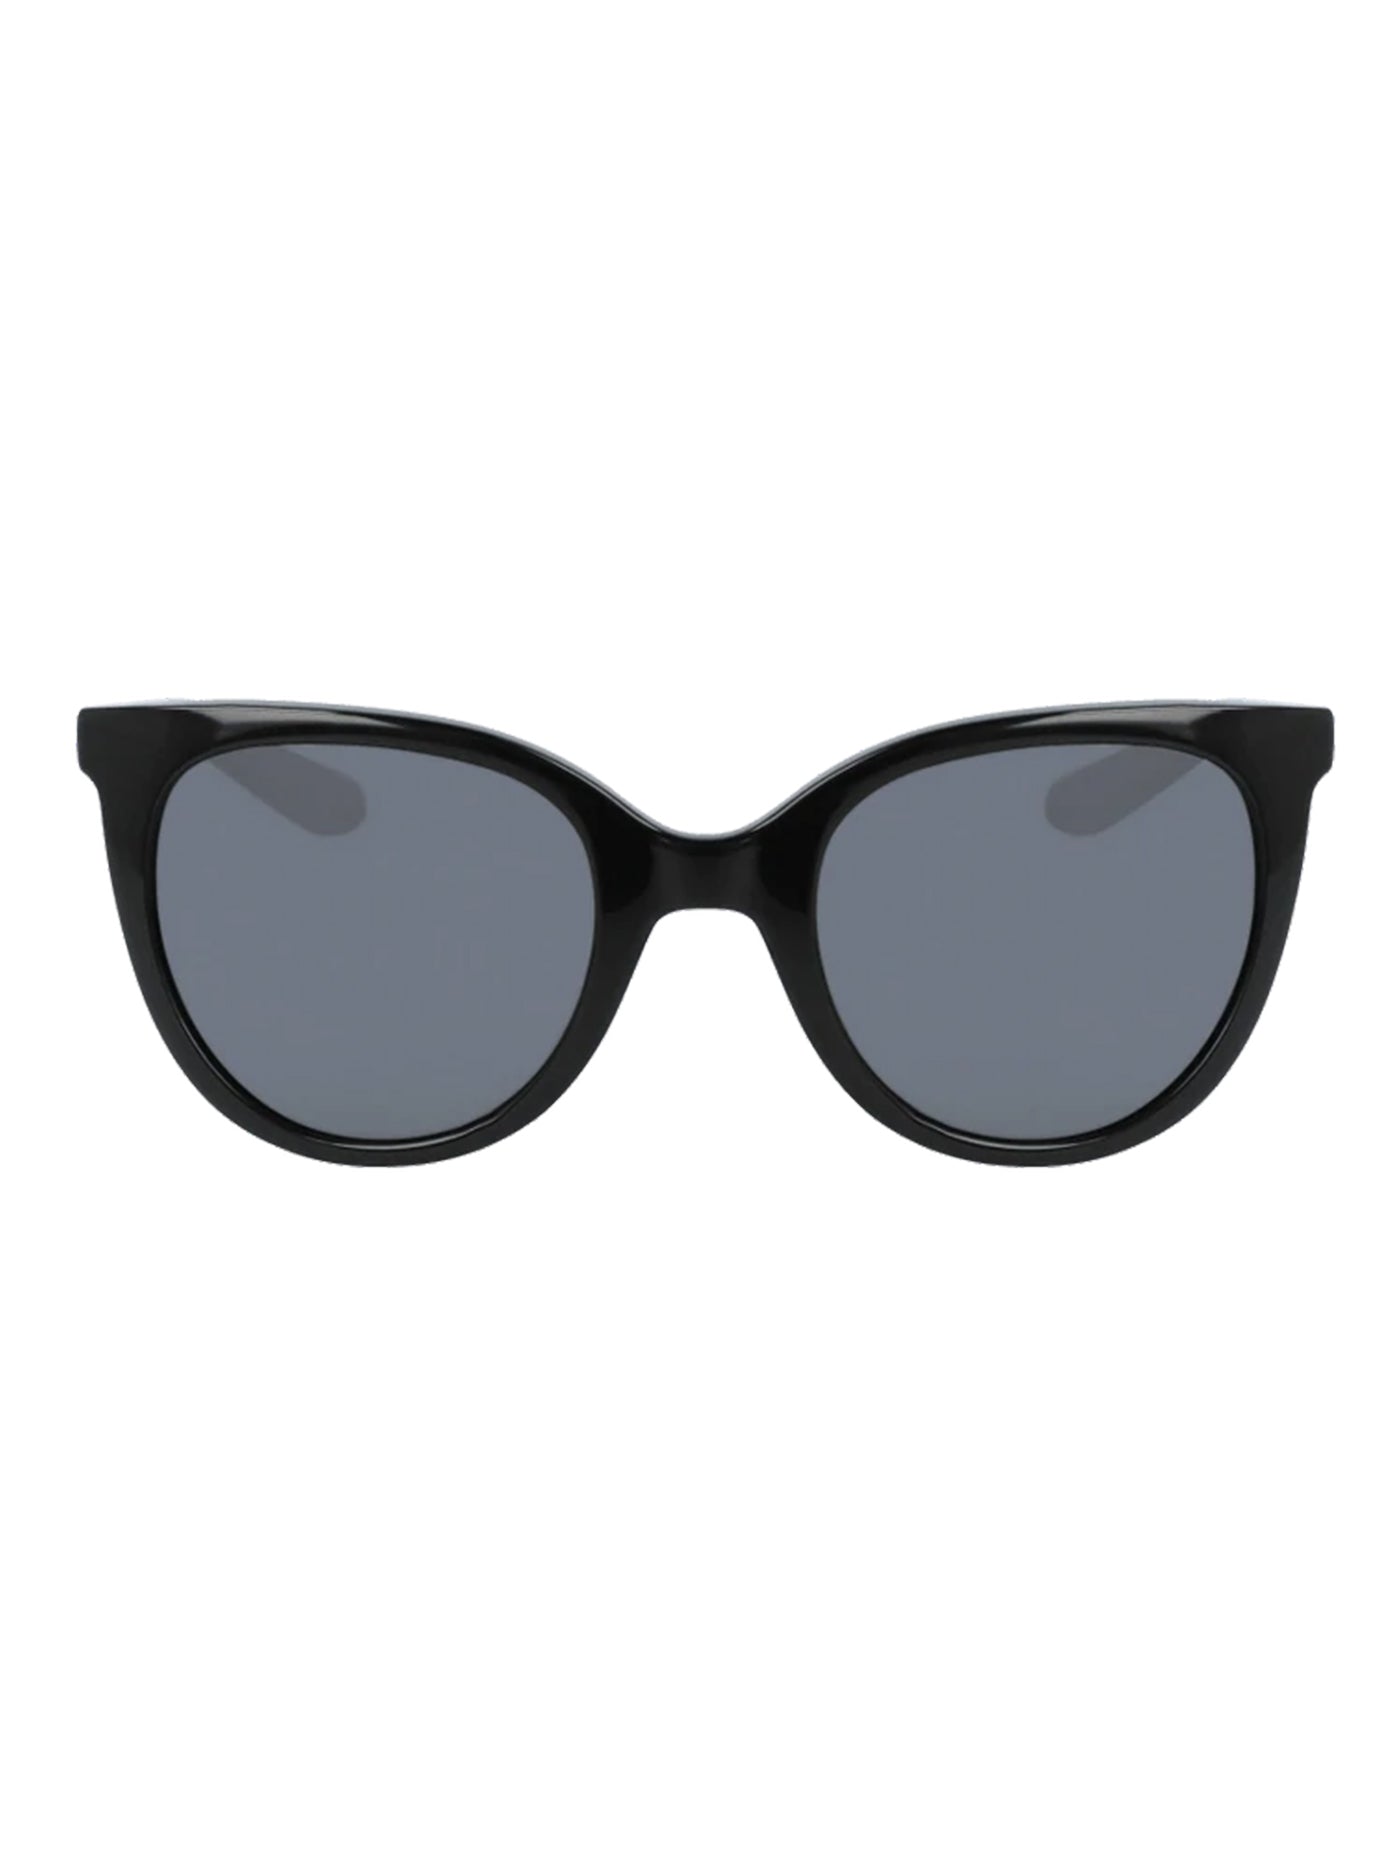 Dragon Juniper Black/Smoke Sunglasses